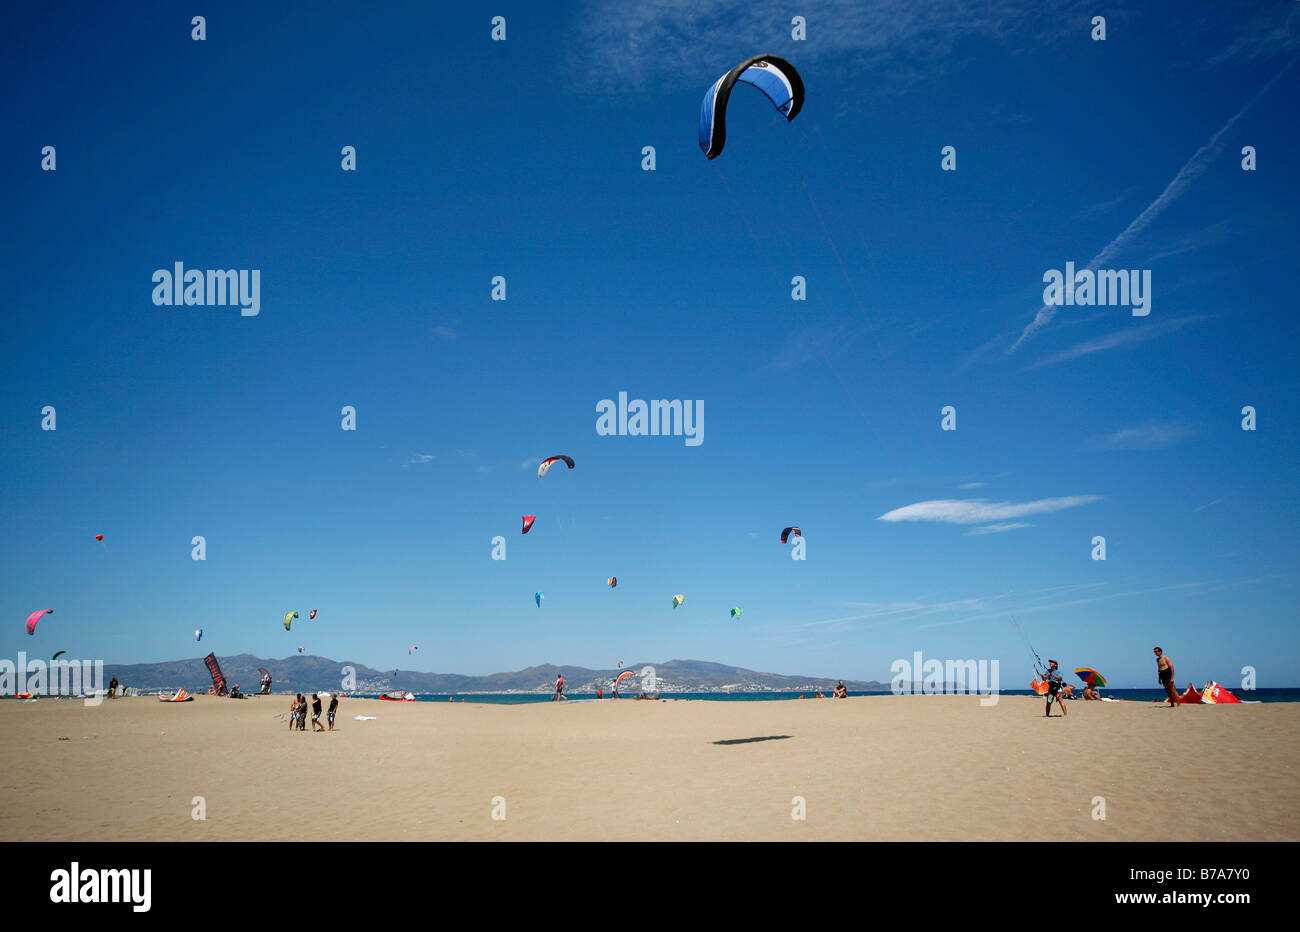 Kitedurfer Taiji am Strand von Empuriabrava, Costa Brava, Katalonien, Mittelmeer, Spanien, Europa Stockfoto